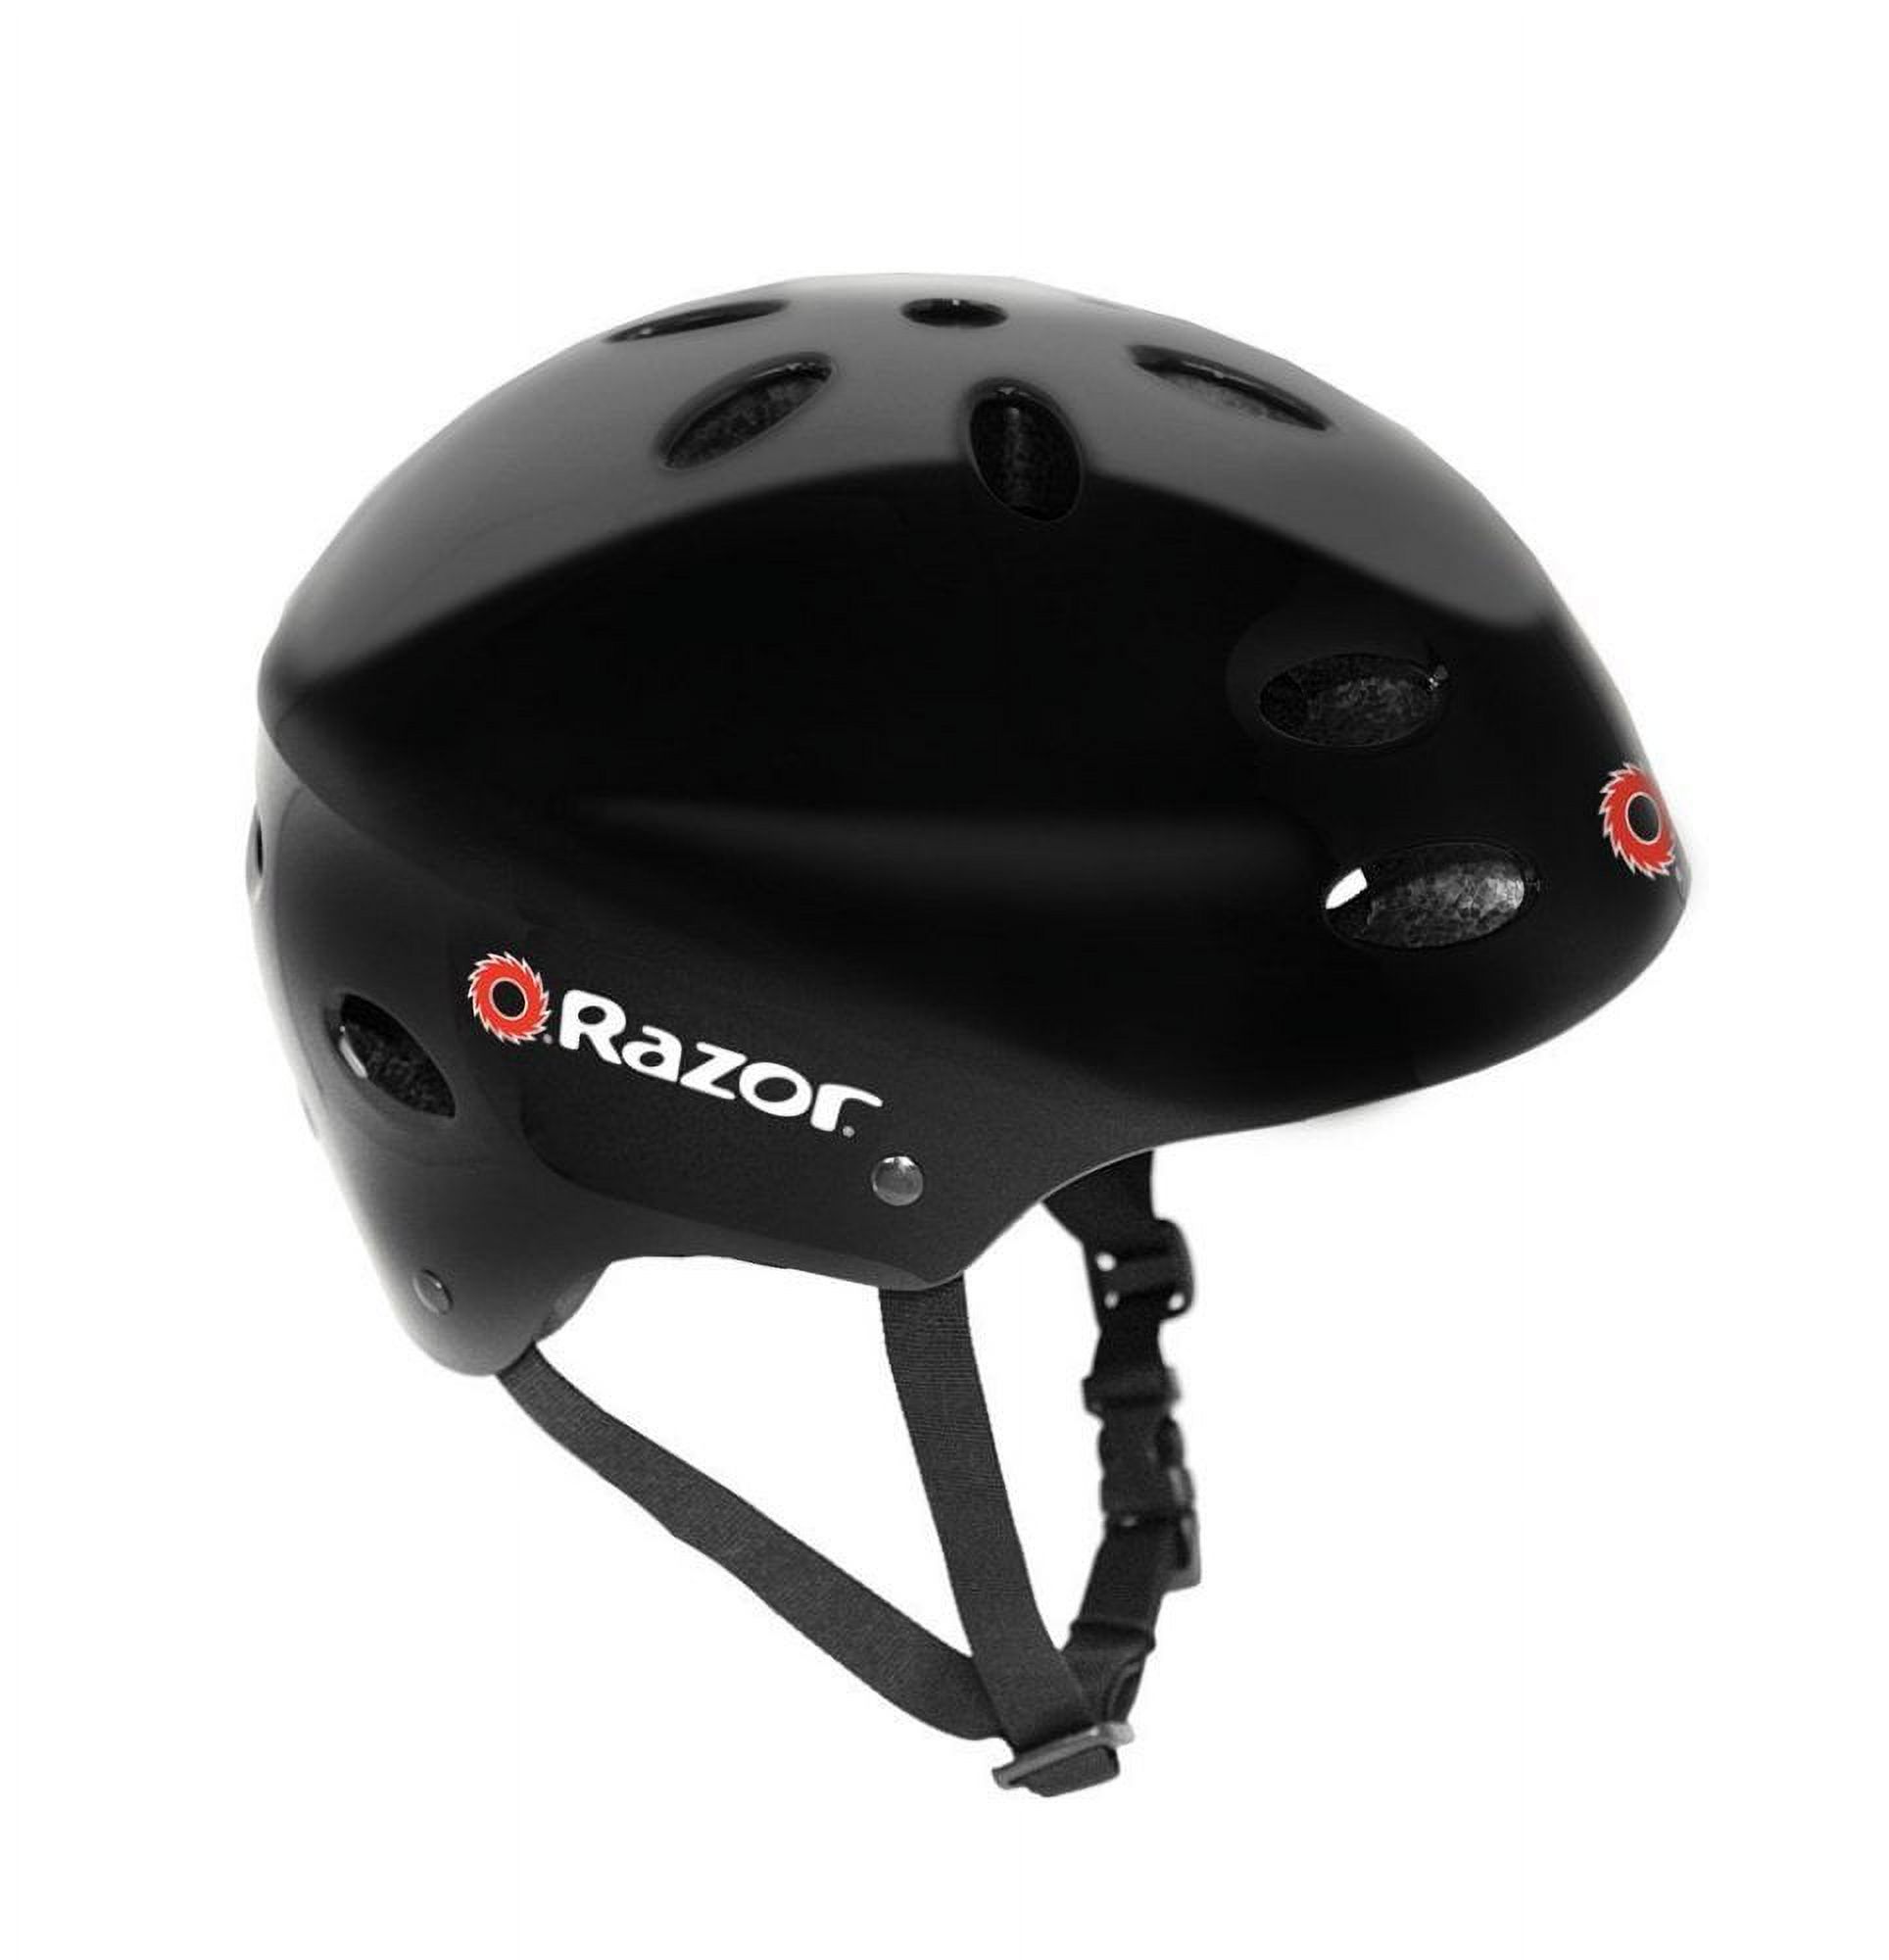 Razor V17 Multi-Sport Child's Helmet, Glossy Black - image 3 of 4